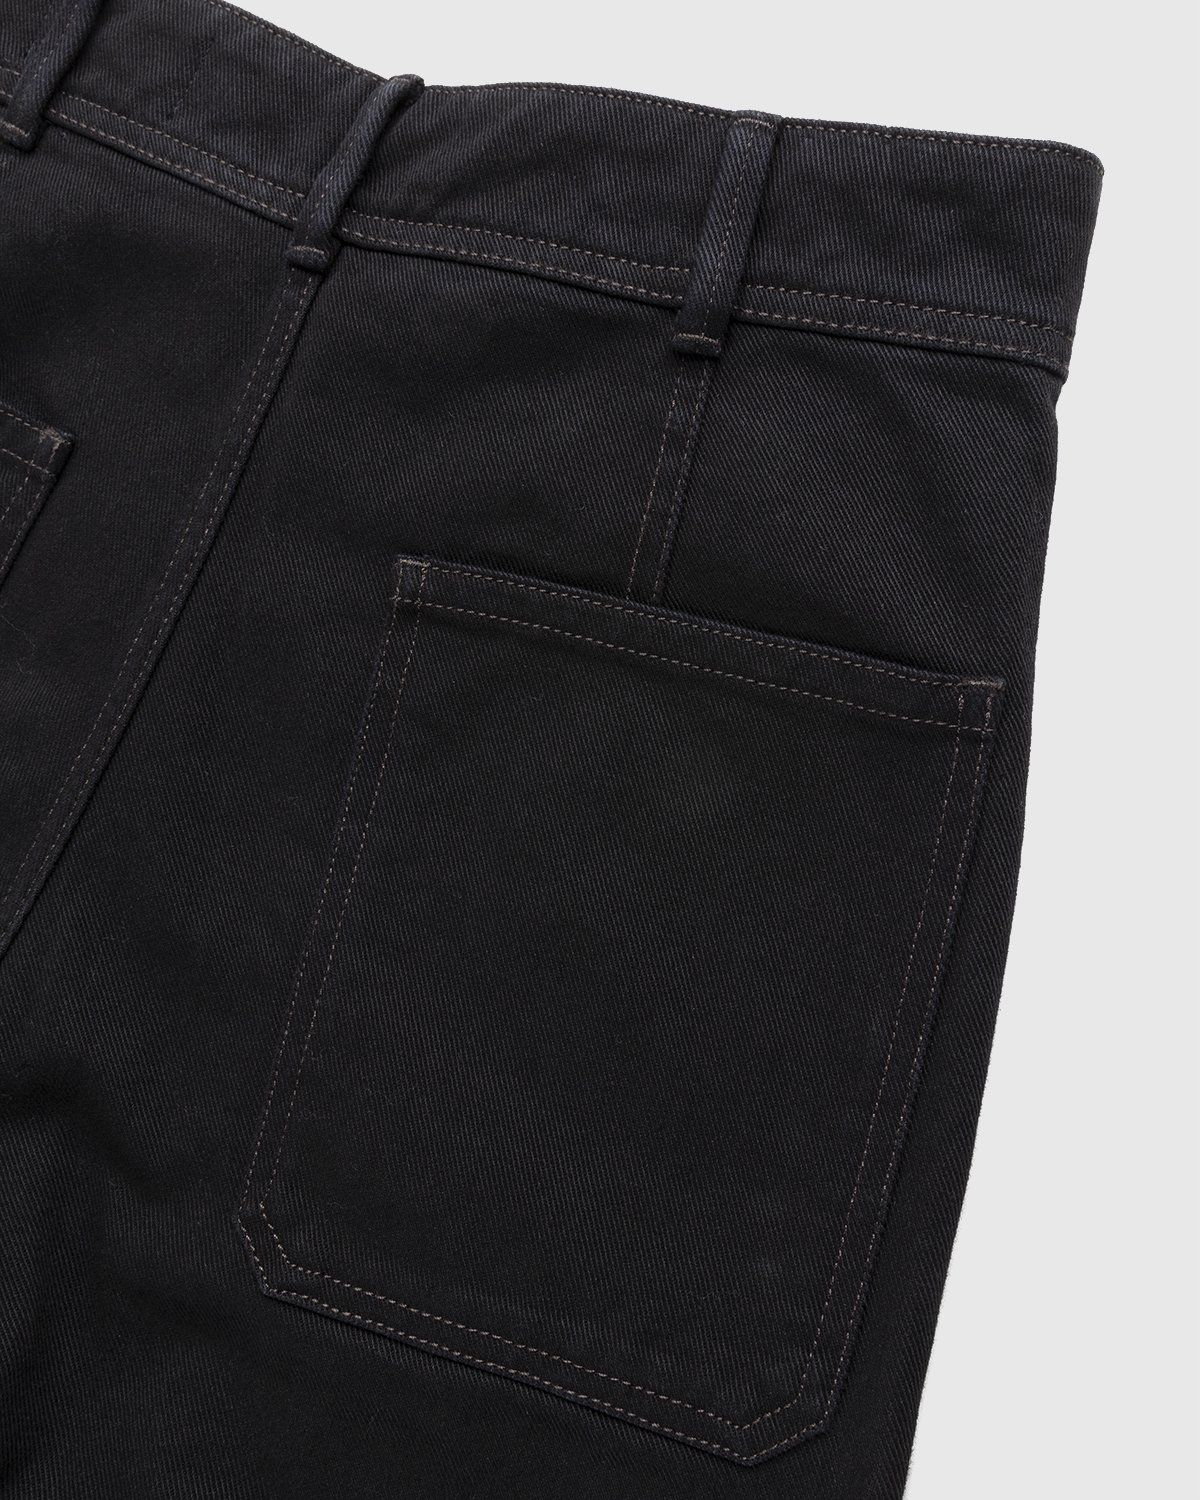 Lemaire – Rinsed Denim Sailor Pants Black - Denim - Black - Image 4